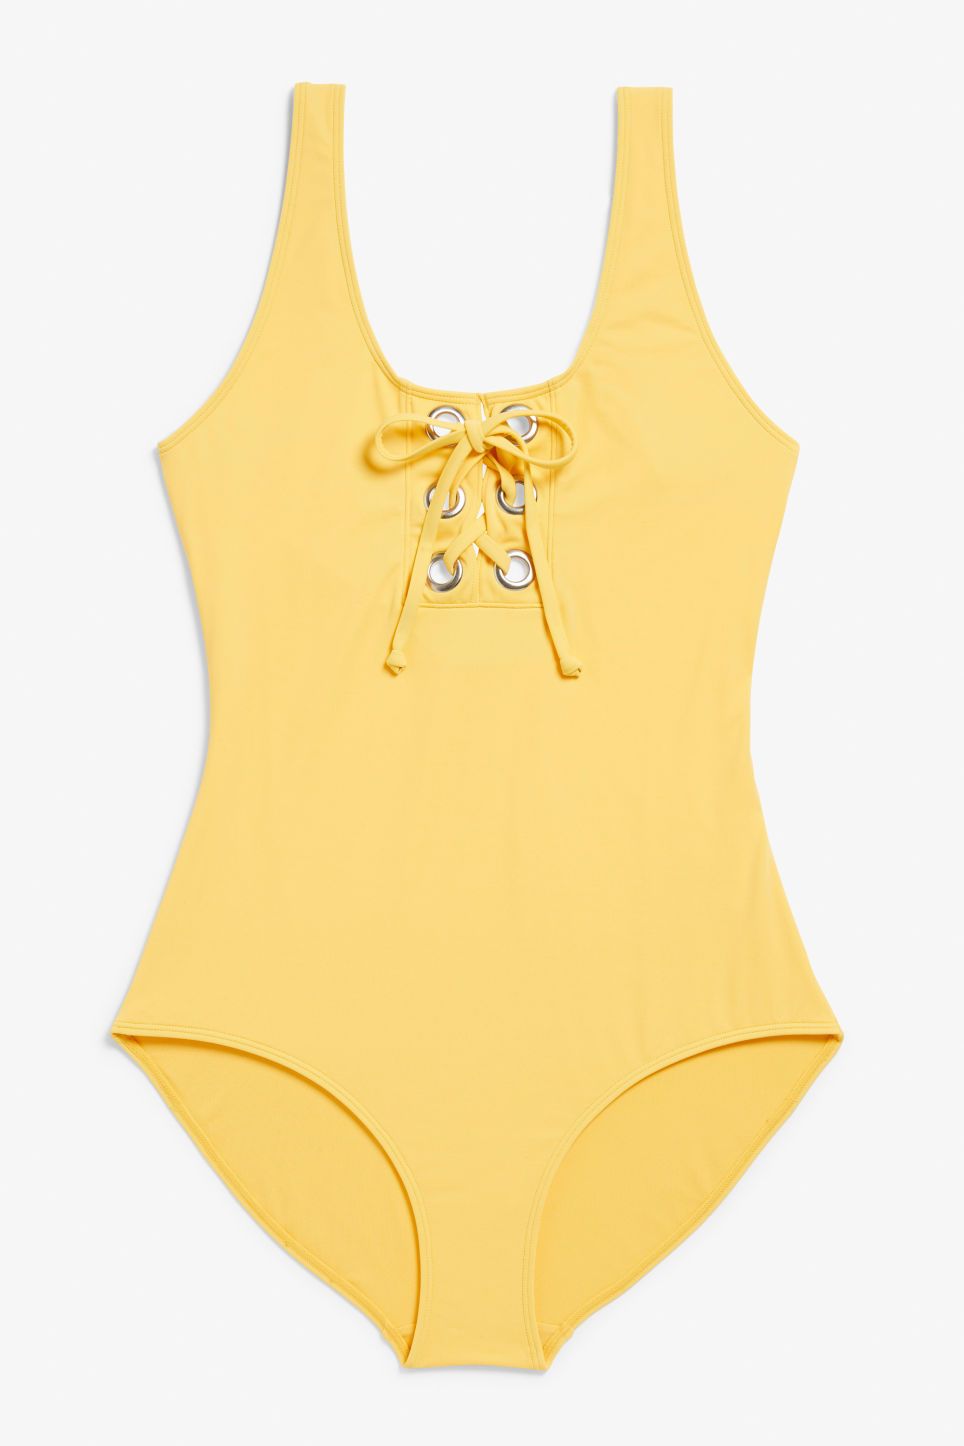 Clothing, Yellow, One-piece swimsuit, Monokini, Swimwear, Swimsuit bottom, Maillot, Undergarment, 